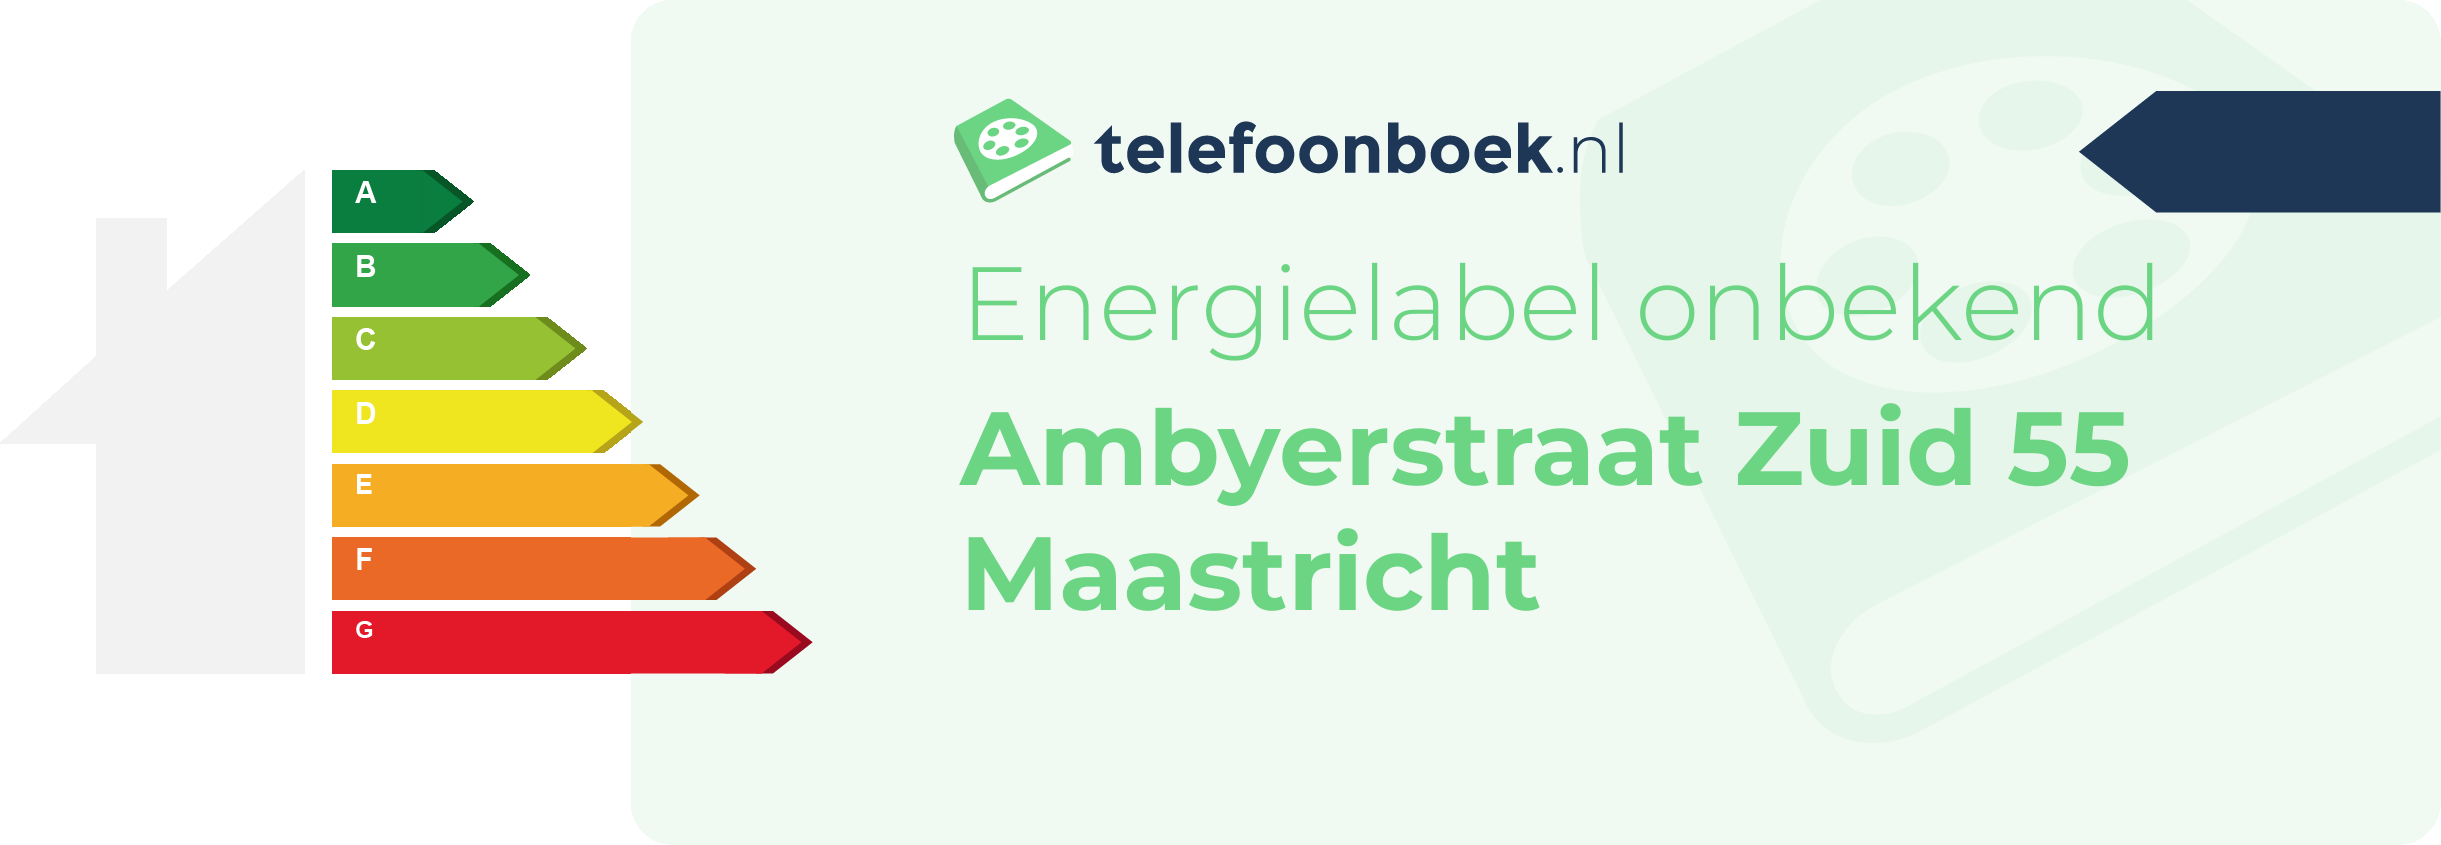 Energielabel Ambyerstraat Zuid 55 Maastricht